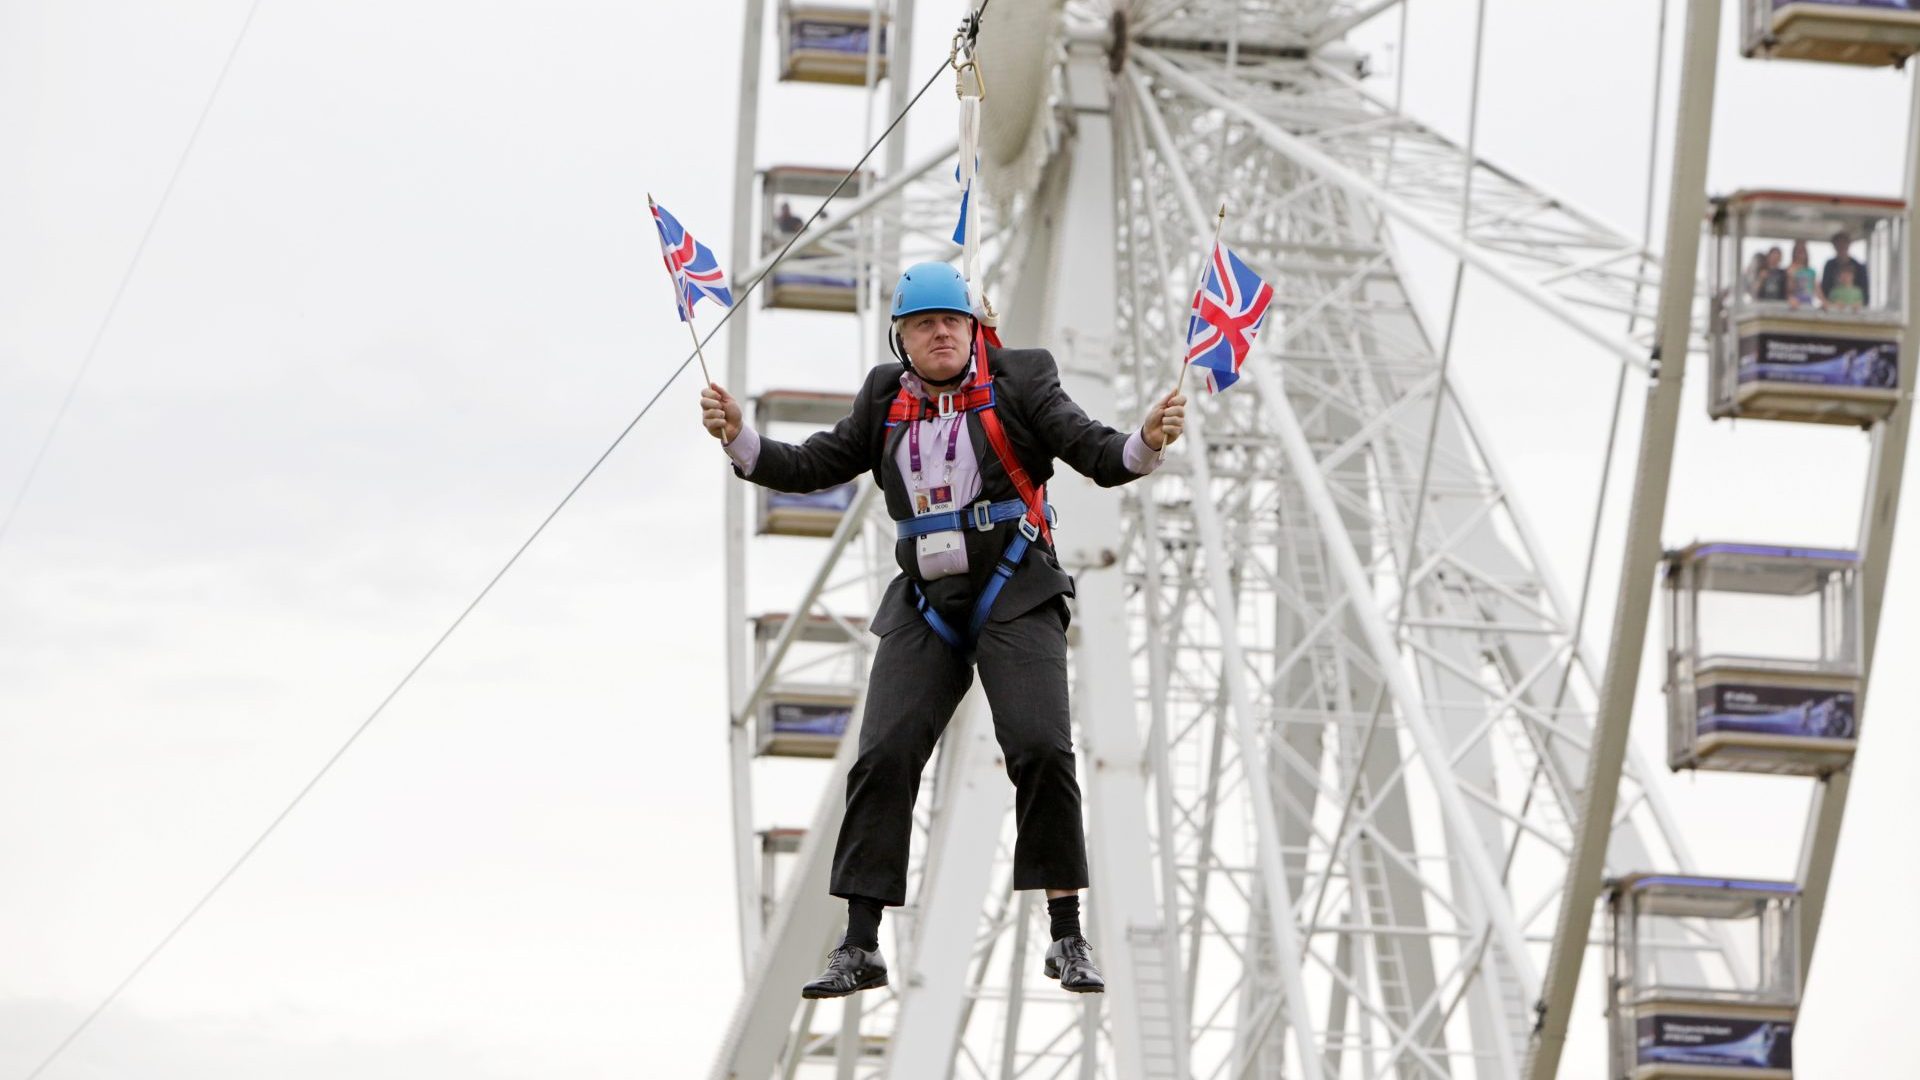 Boris Johnson got stuck on a zip-line during BT London Live in Victoria Park back in 2012. Photo: Barcroft Media / Barcroft Media via Getty Images